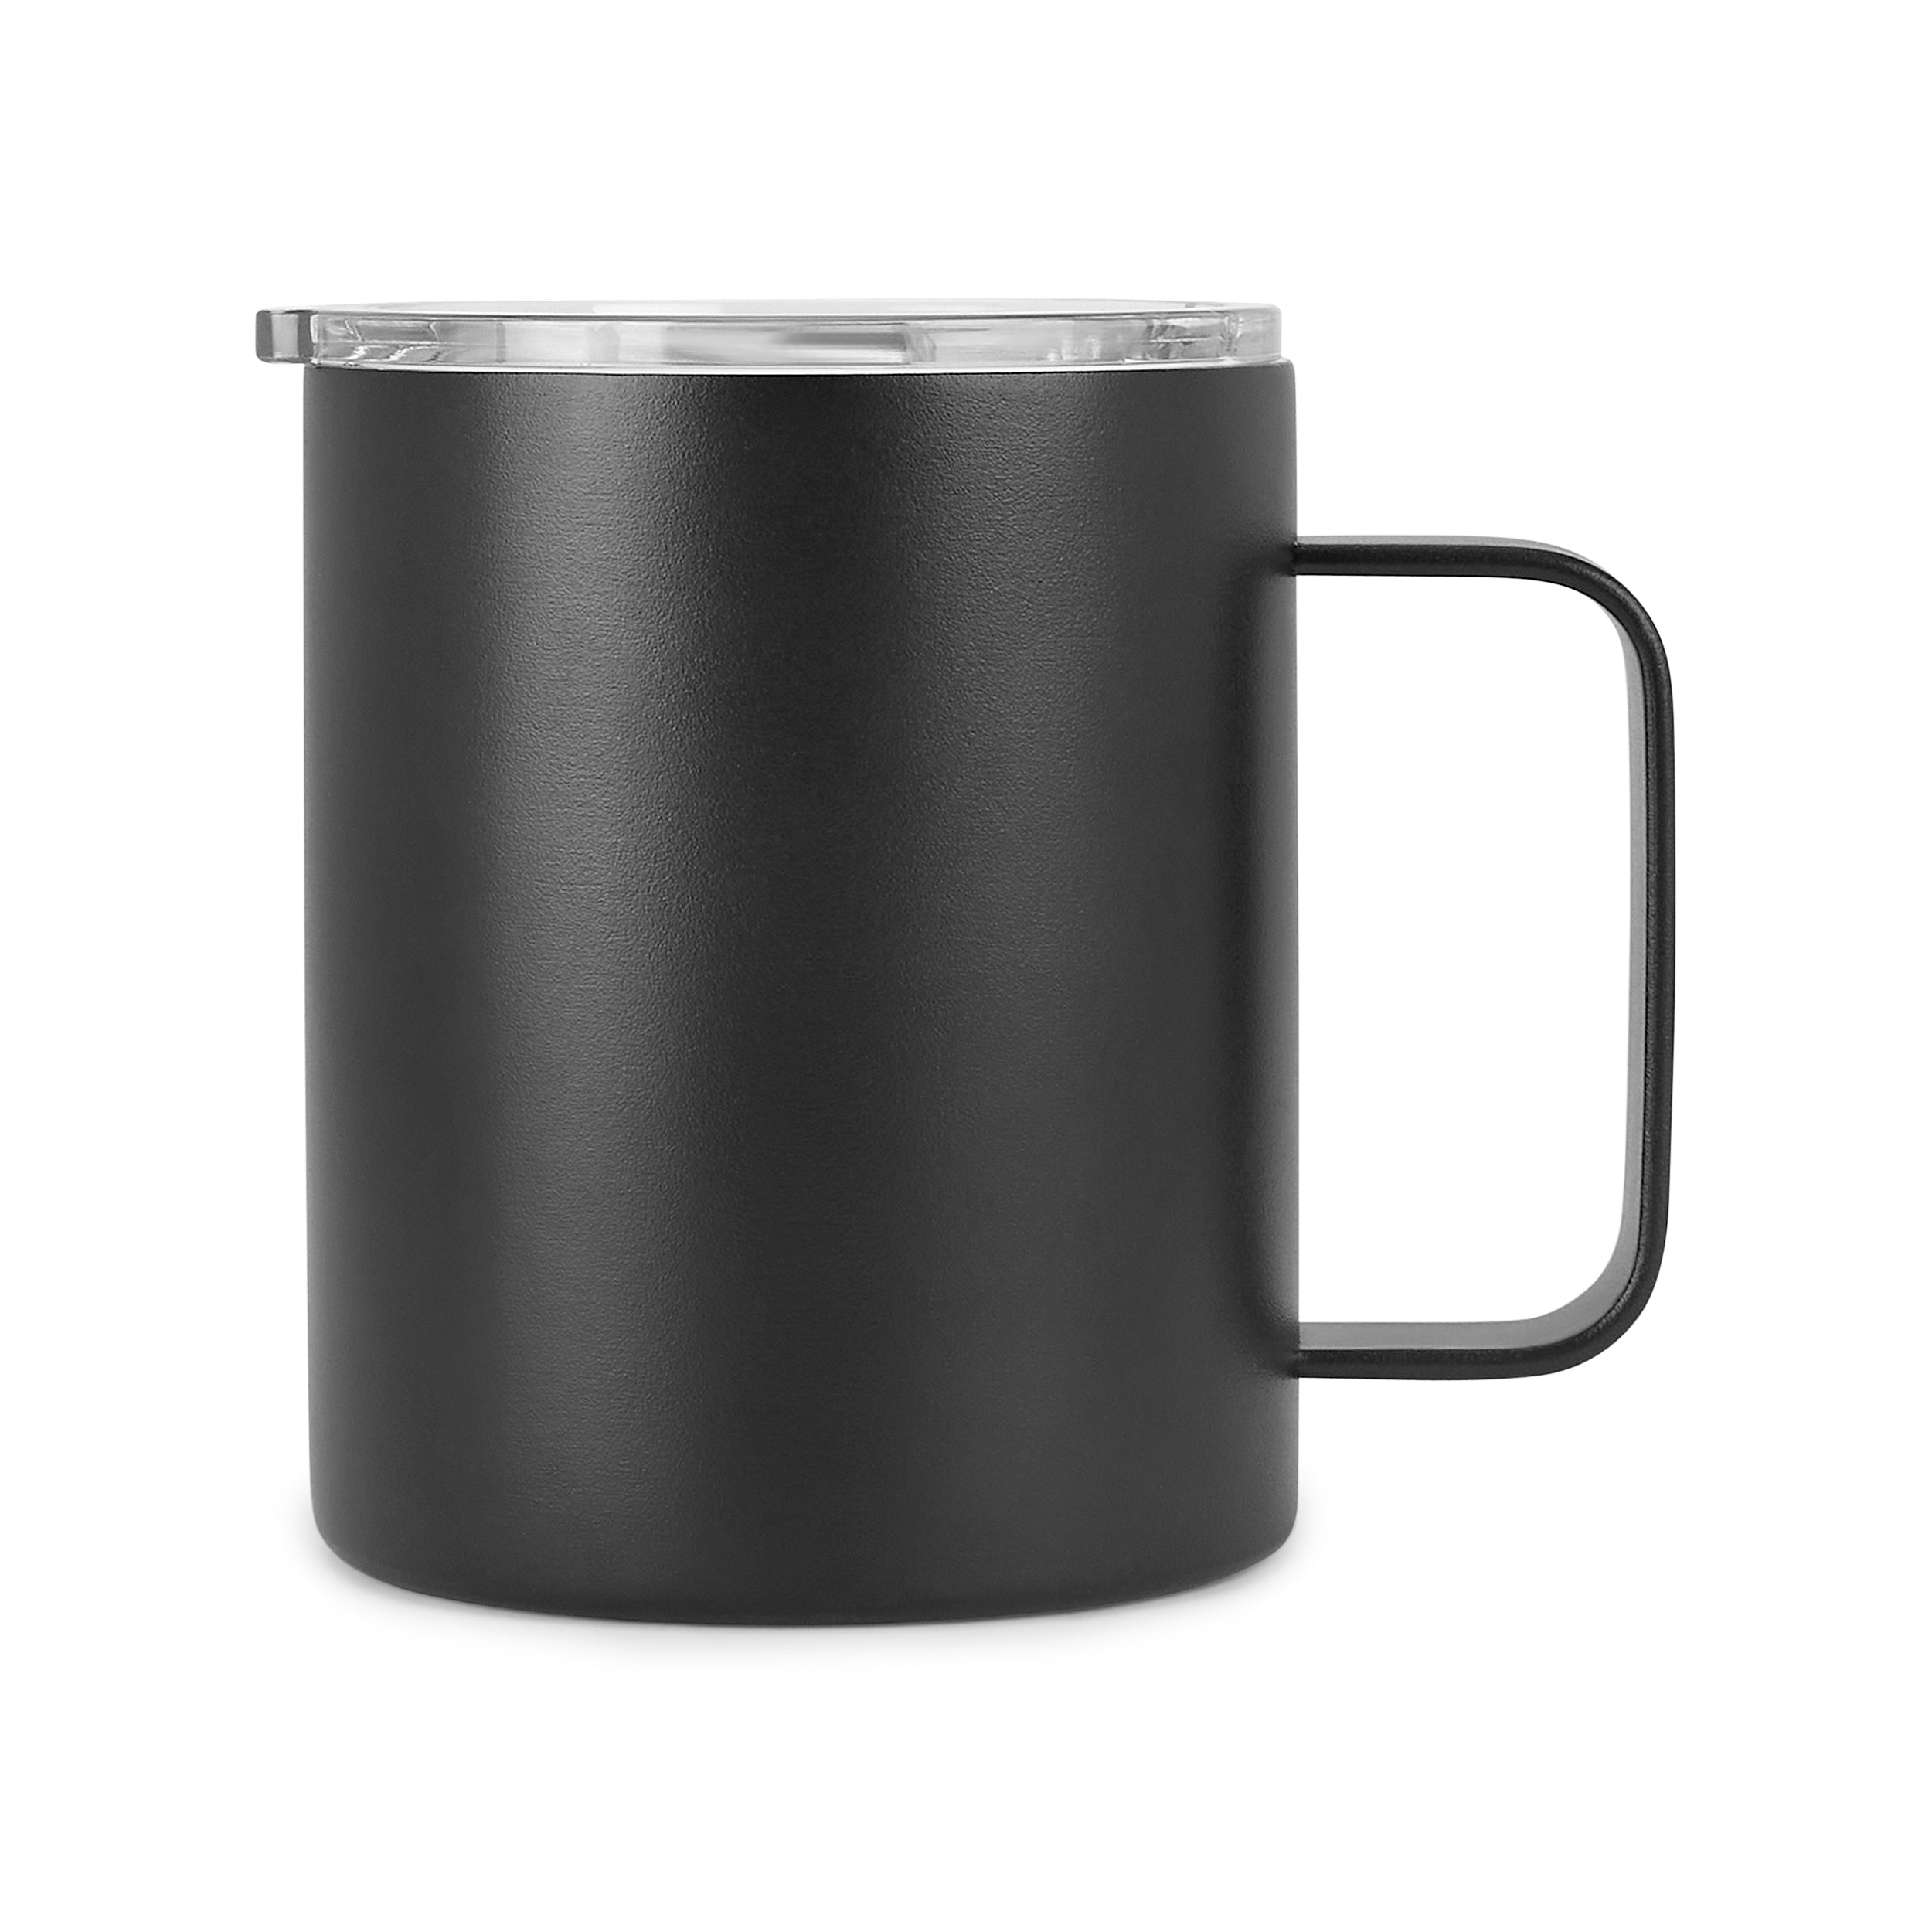 12oz Coffee Mug For Cancer Awareness